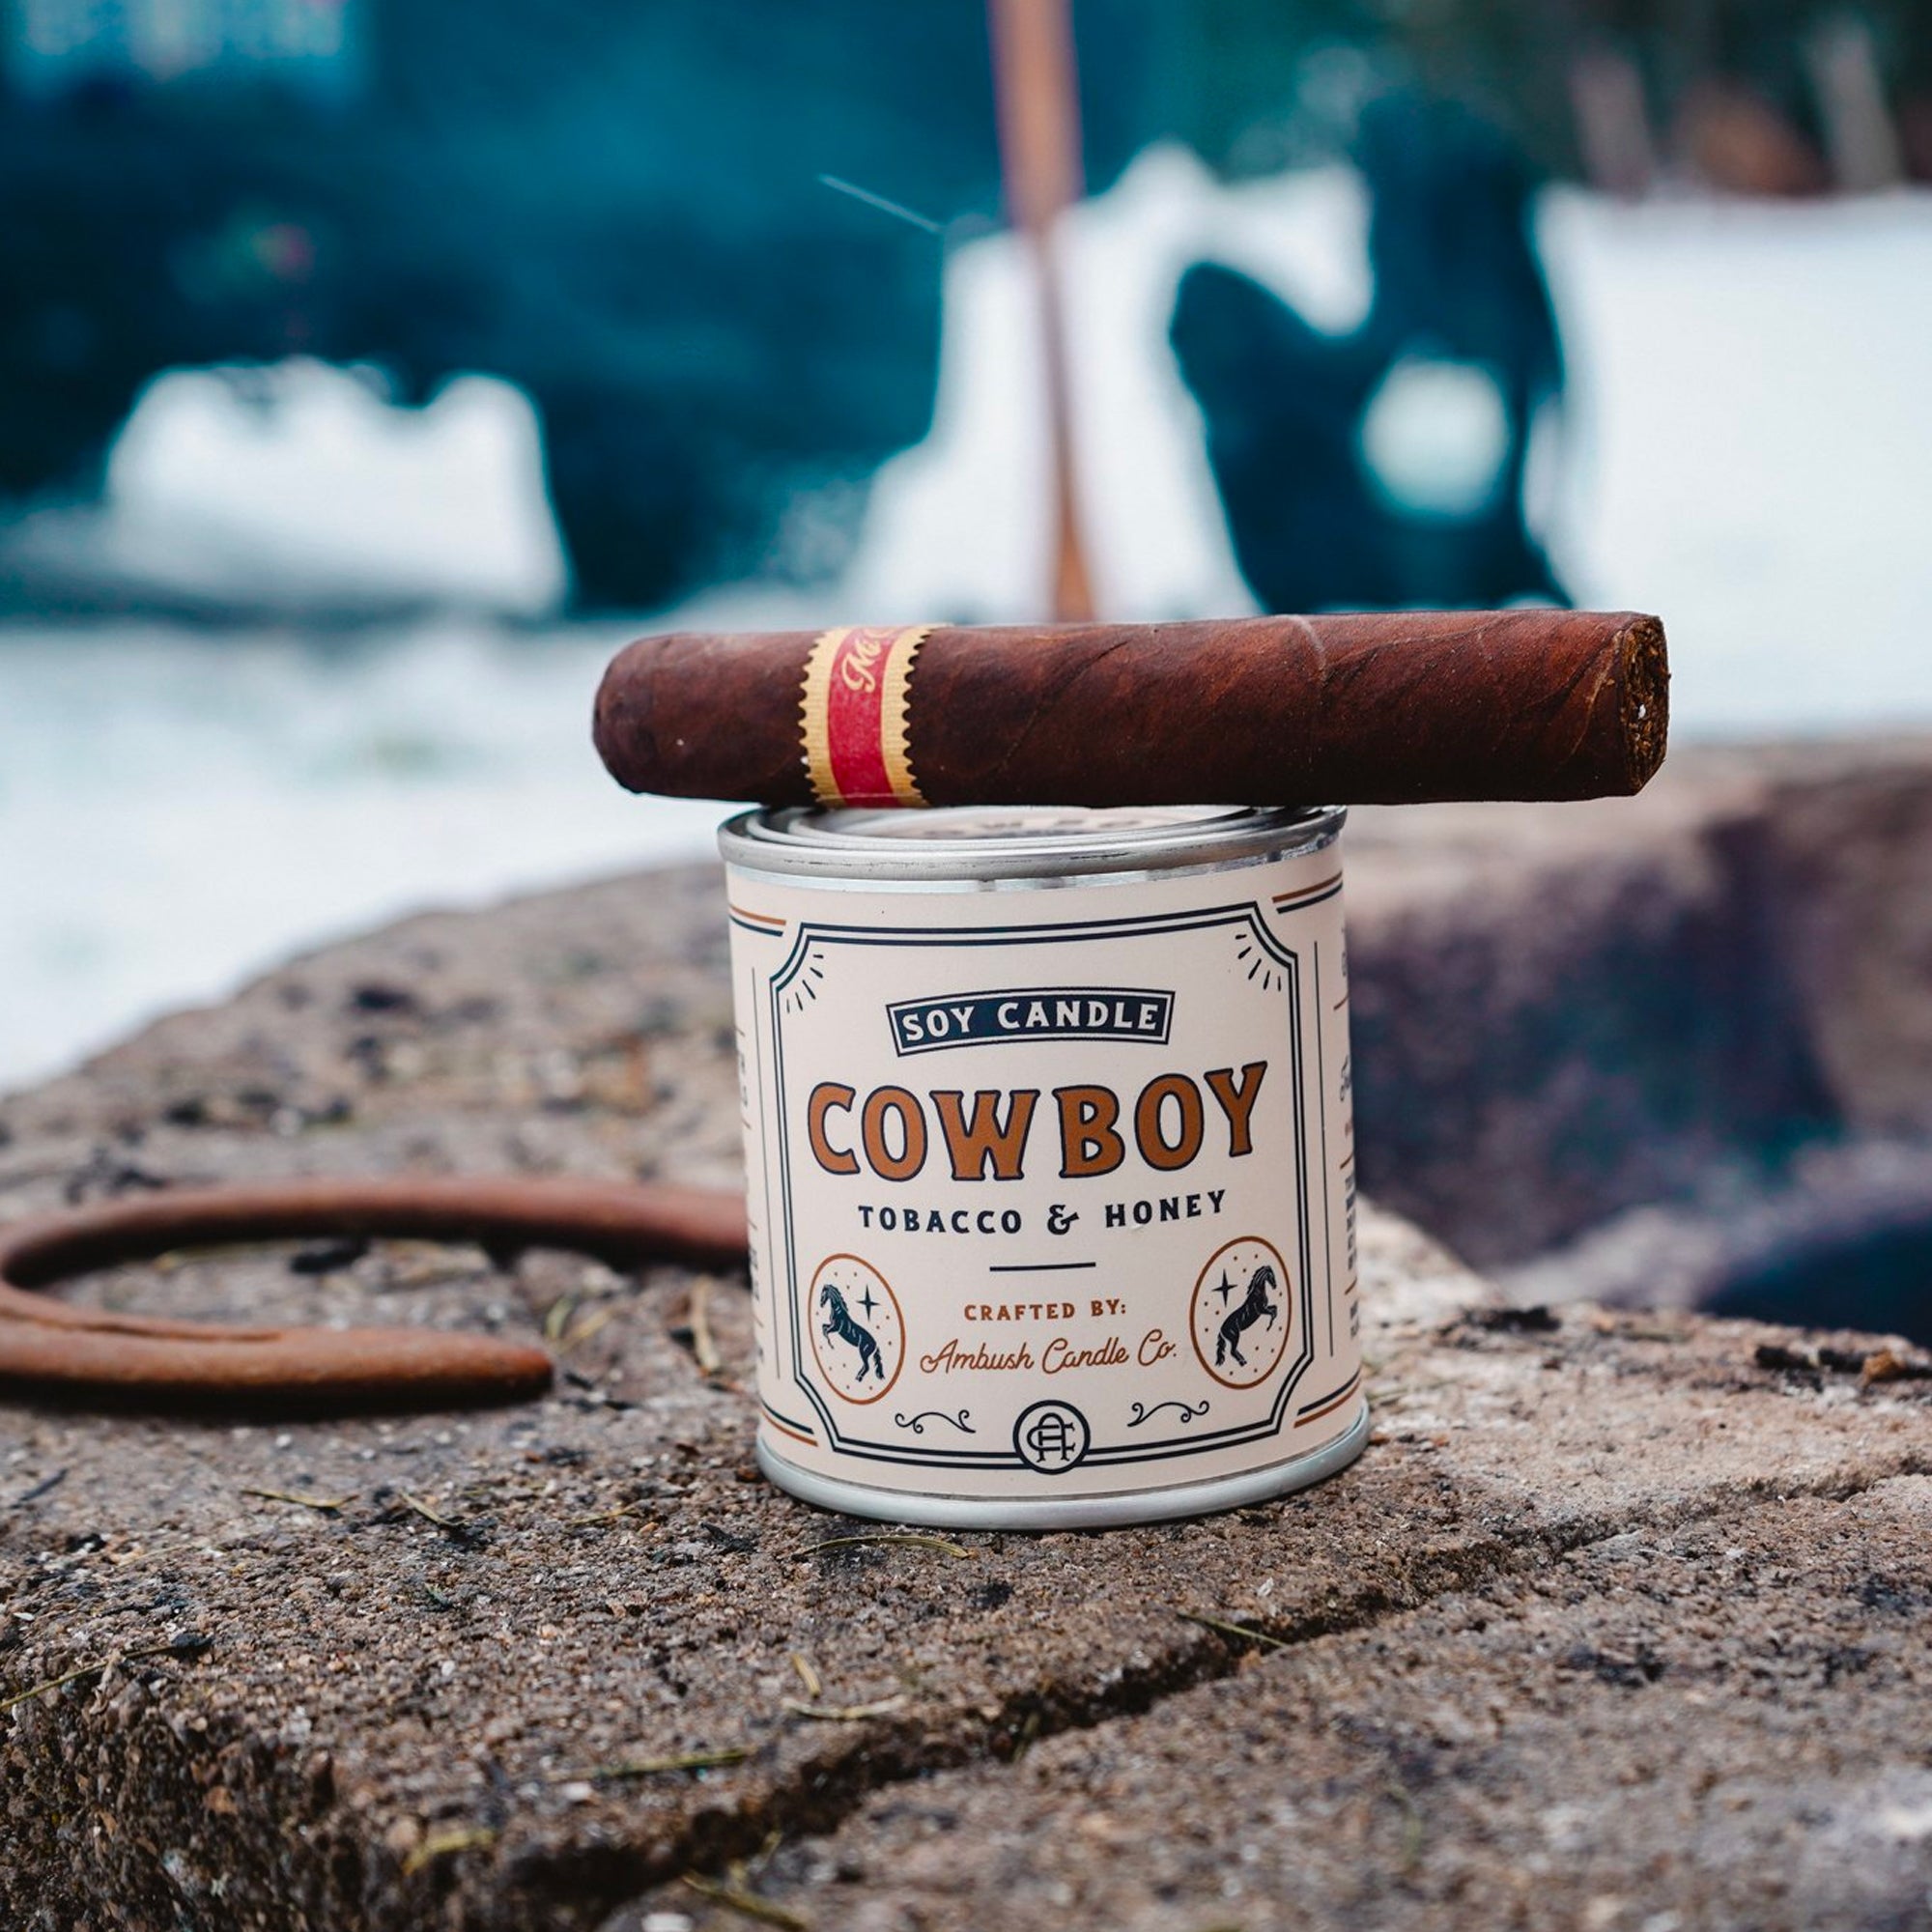 Ambush Candle Co. 8oz 'Cowboy' Soy Candle - Tobacco / Honey